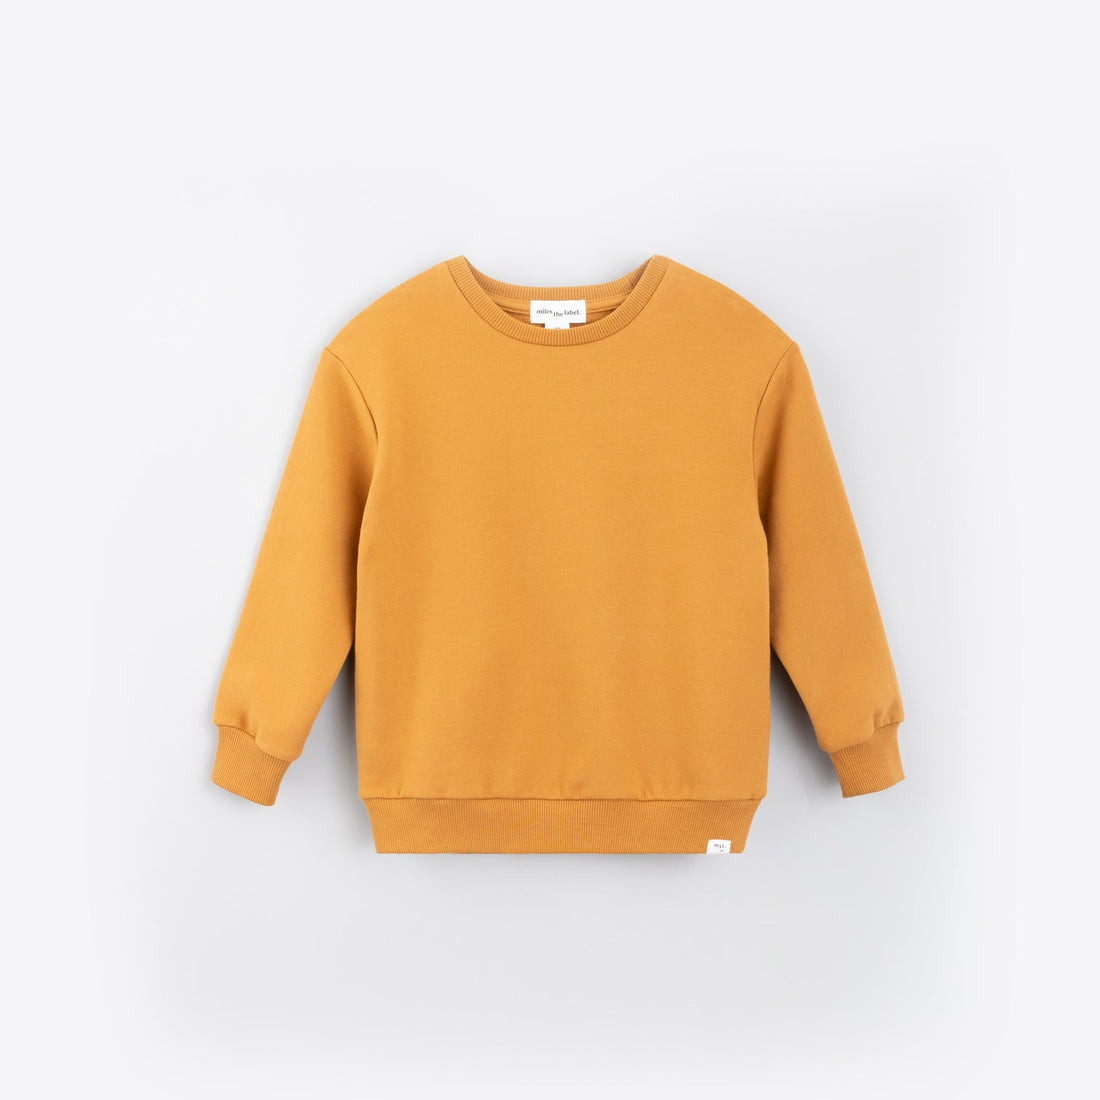 Miles Basics Dijon Fleece Sweatshirt